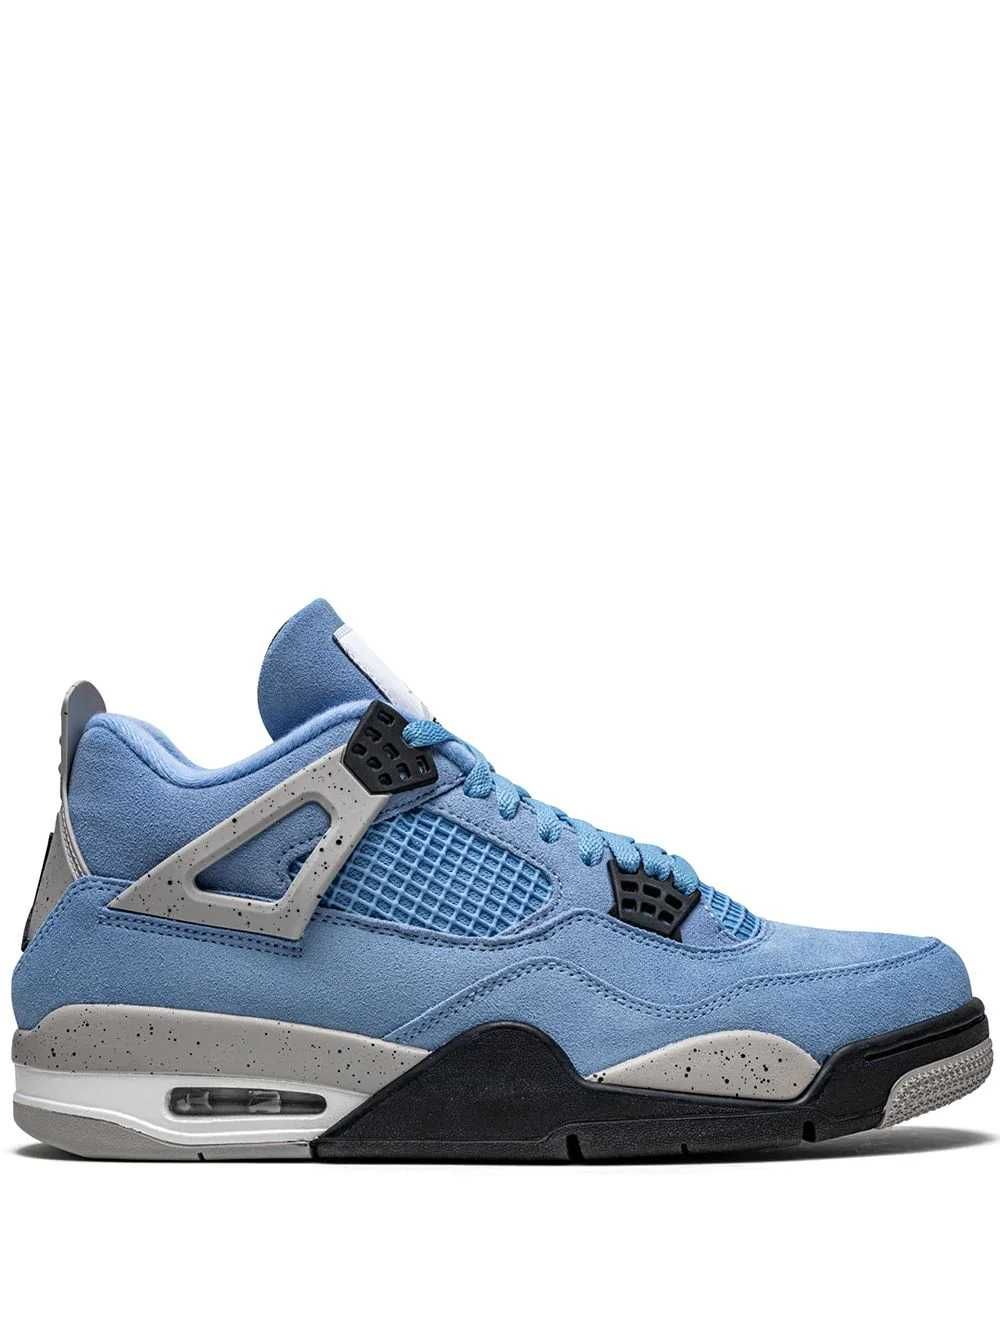 Air Jordan 4 Retro sneakers university blue